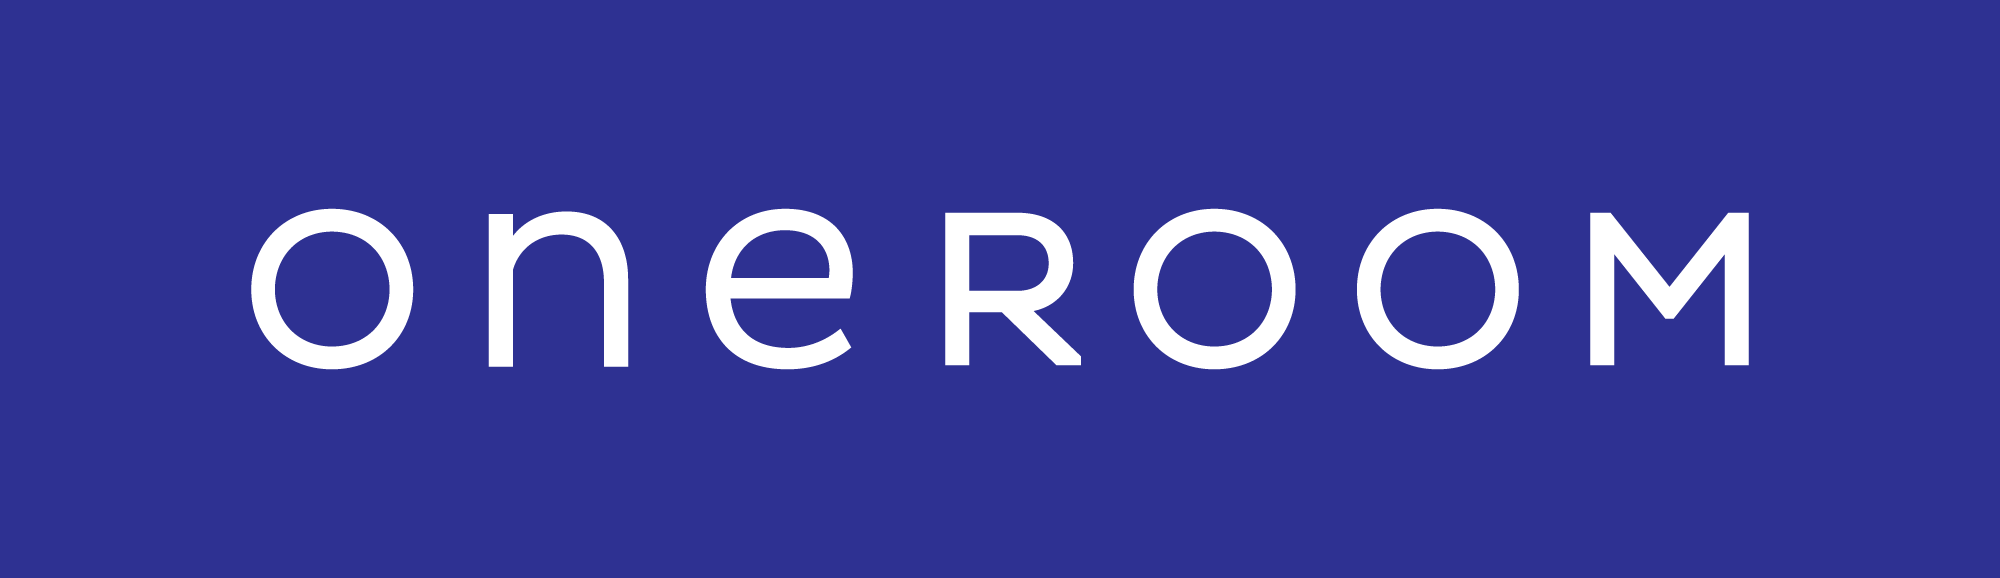 OneRoom logo